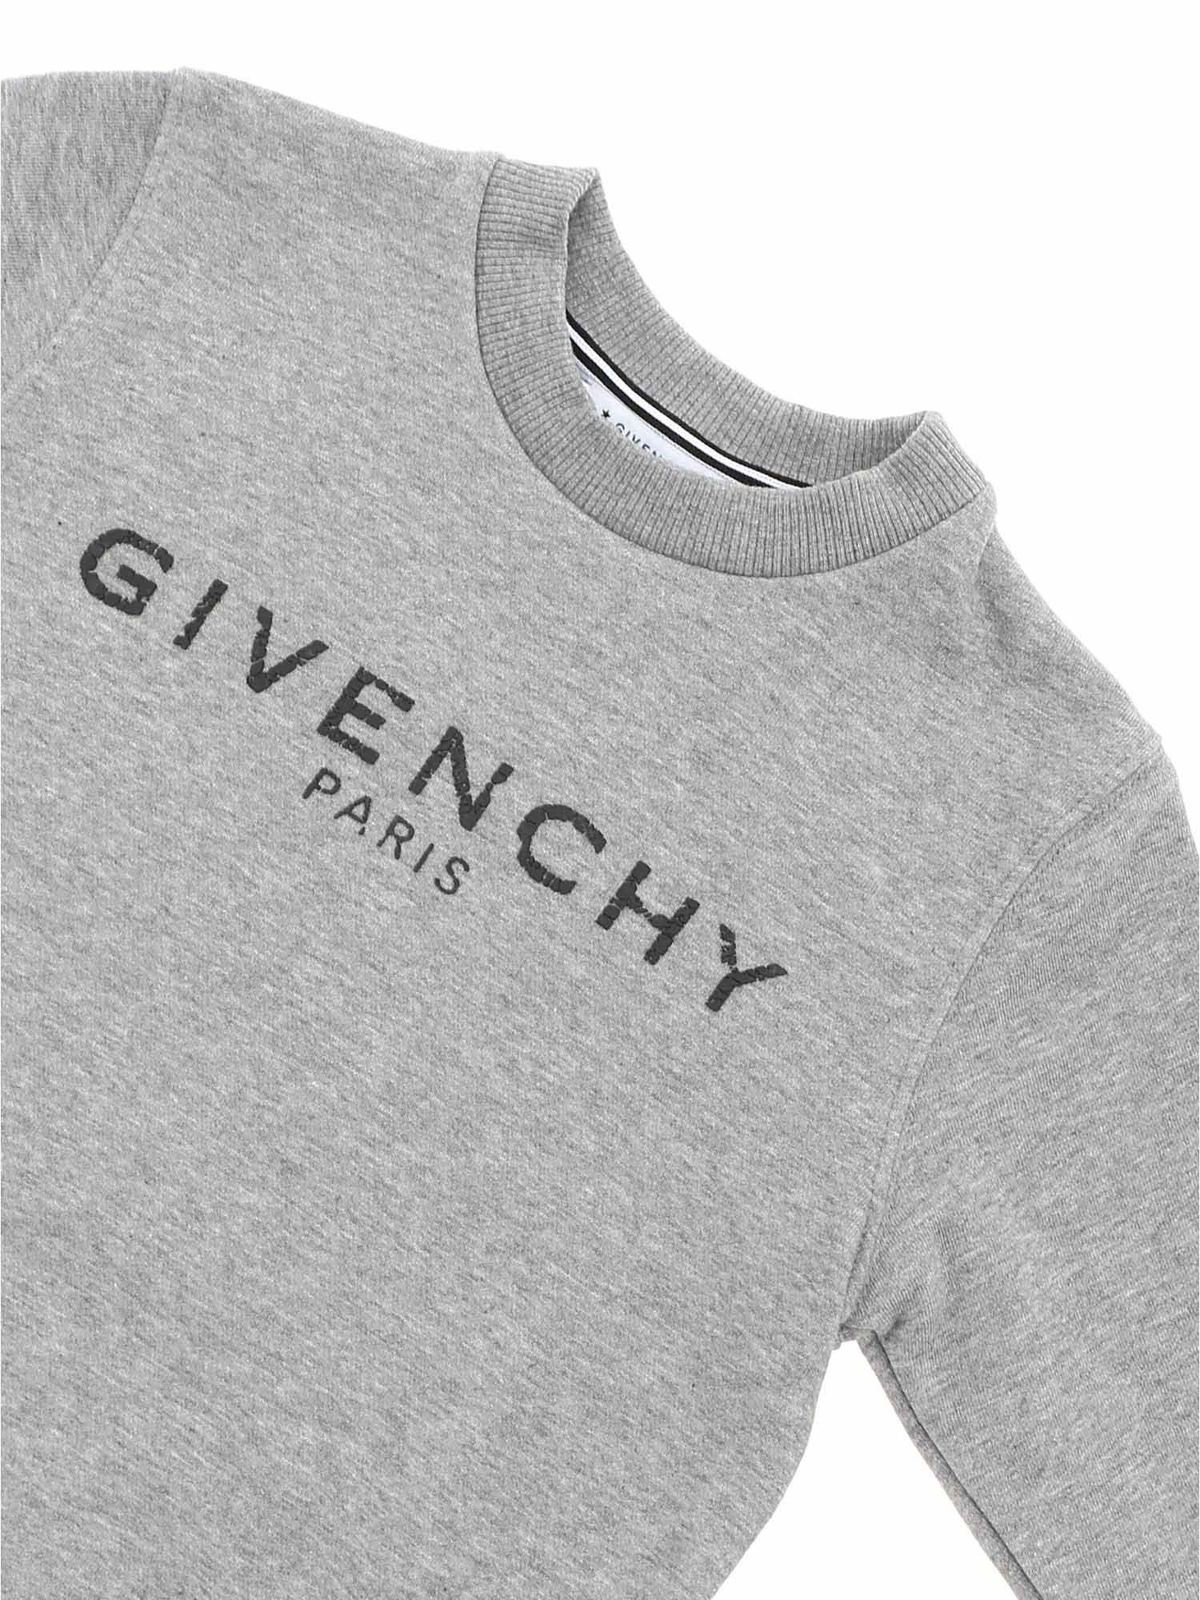 Vintage Givenchy printed sweatshirt in 